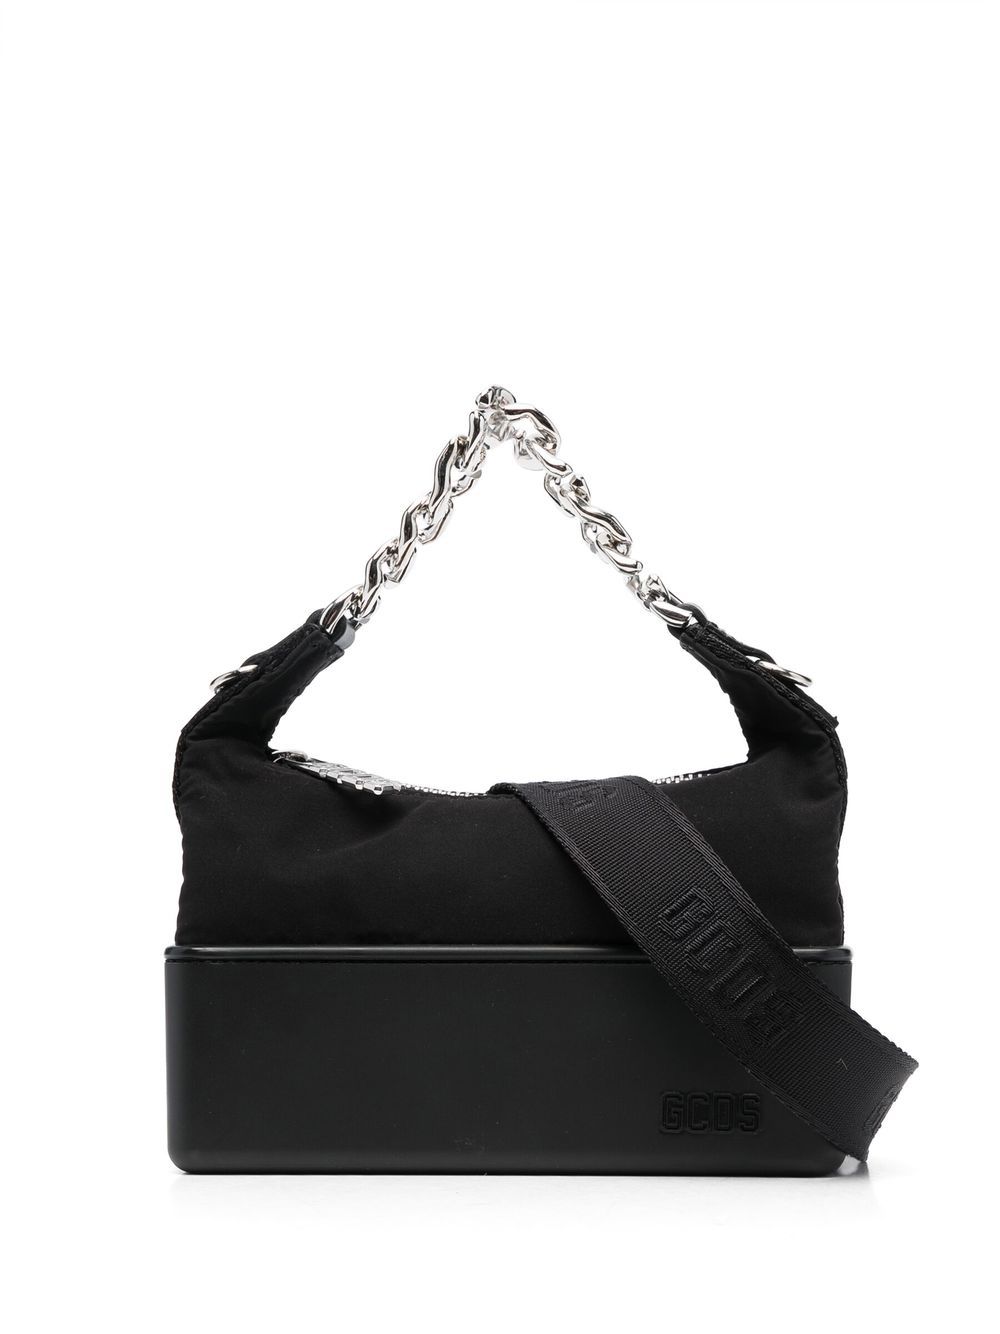 Gcds Matilda leather mini bag - Black von Gcds